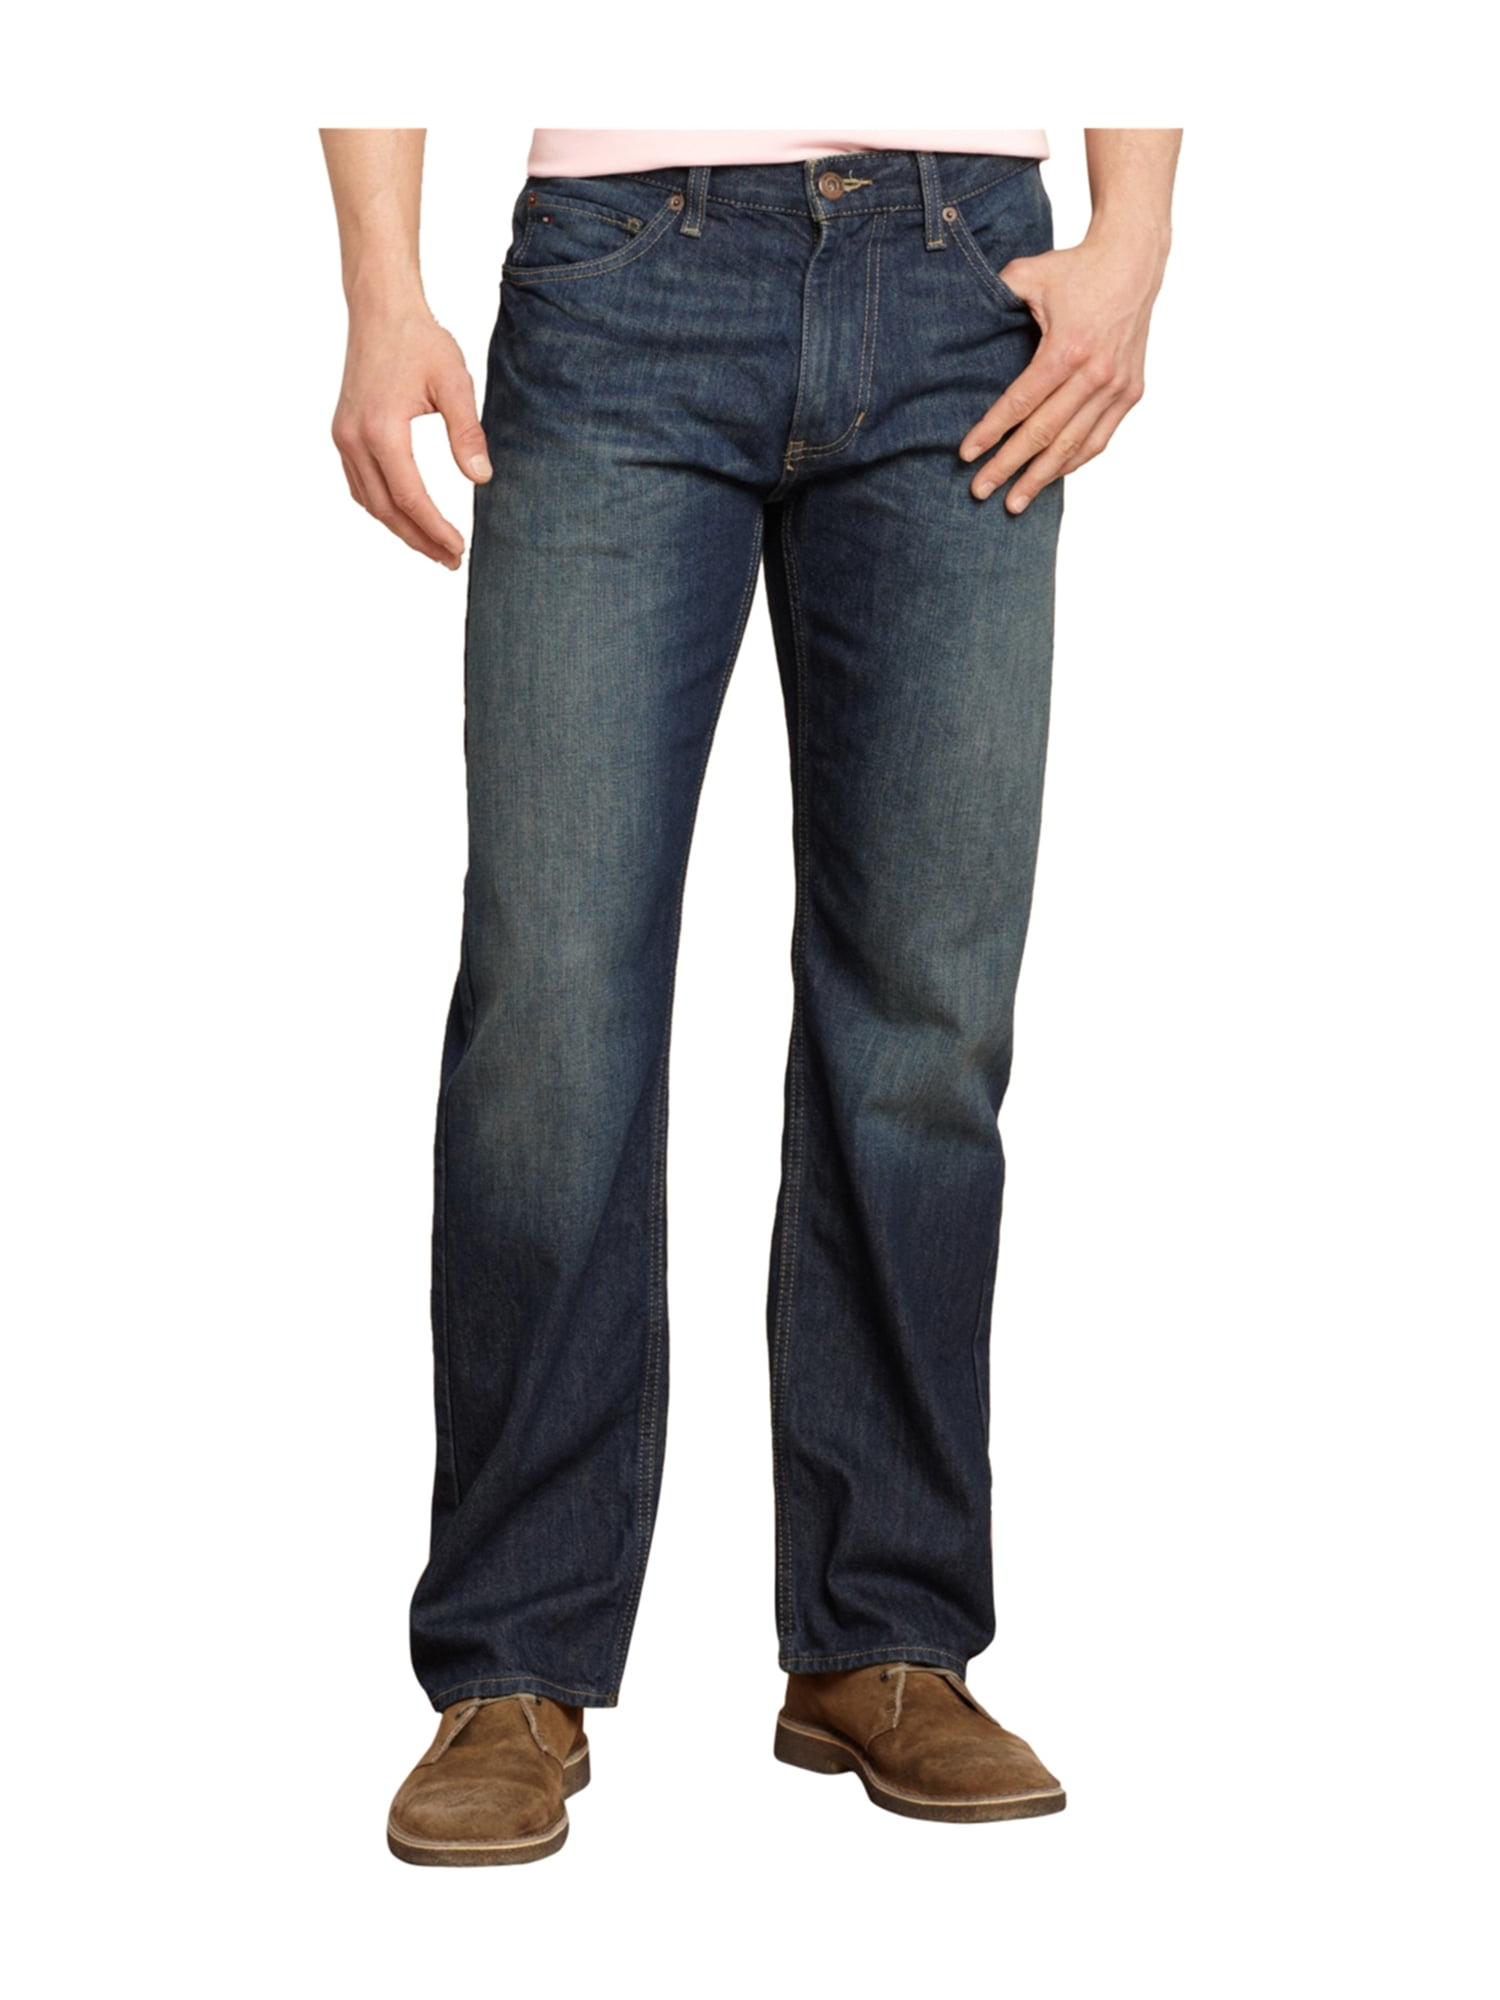 Tommy Hilfiger Mens Campus Freedom Loose Fit Jeans 955 58 Big/32 - Big ...